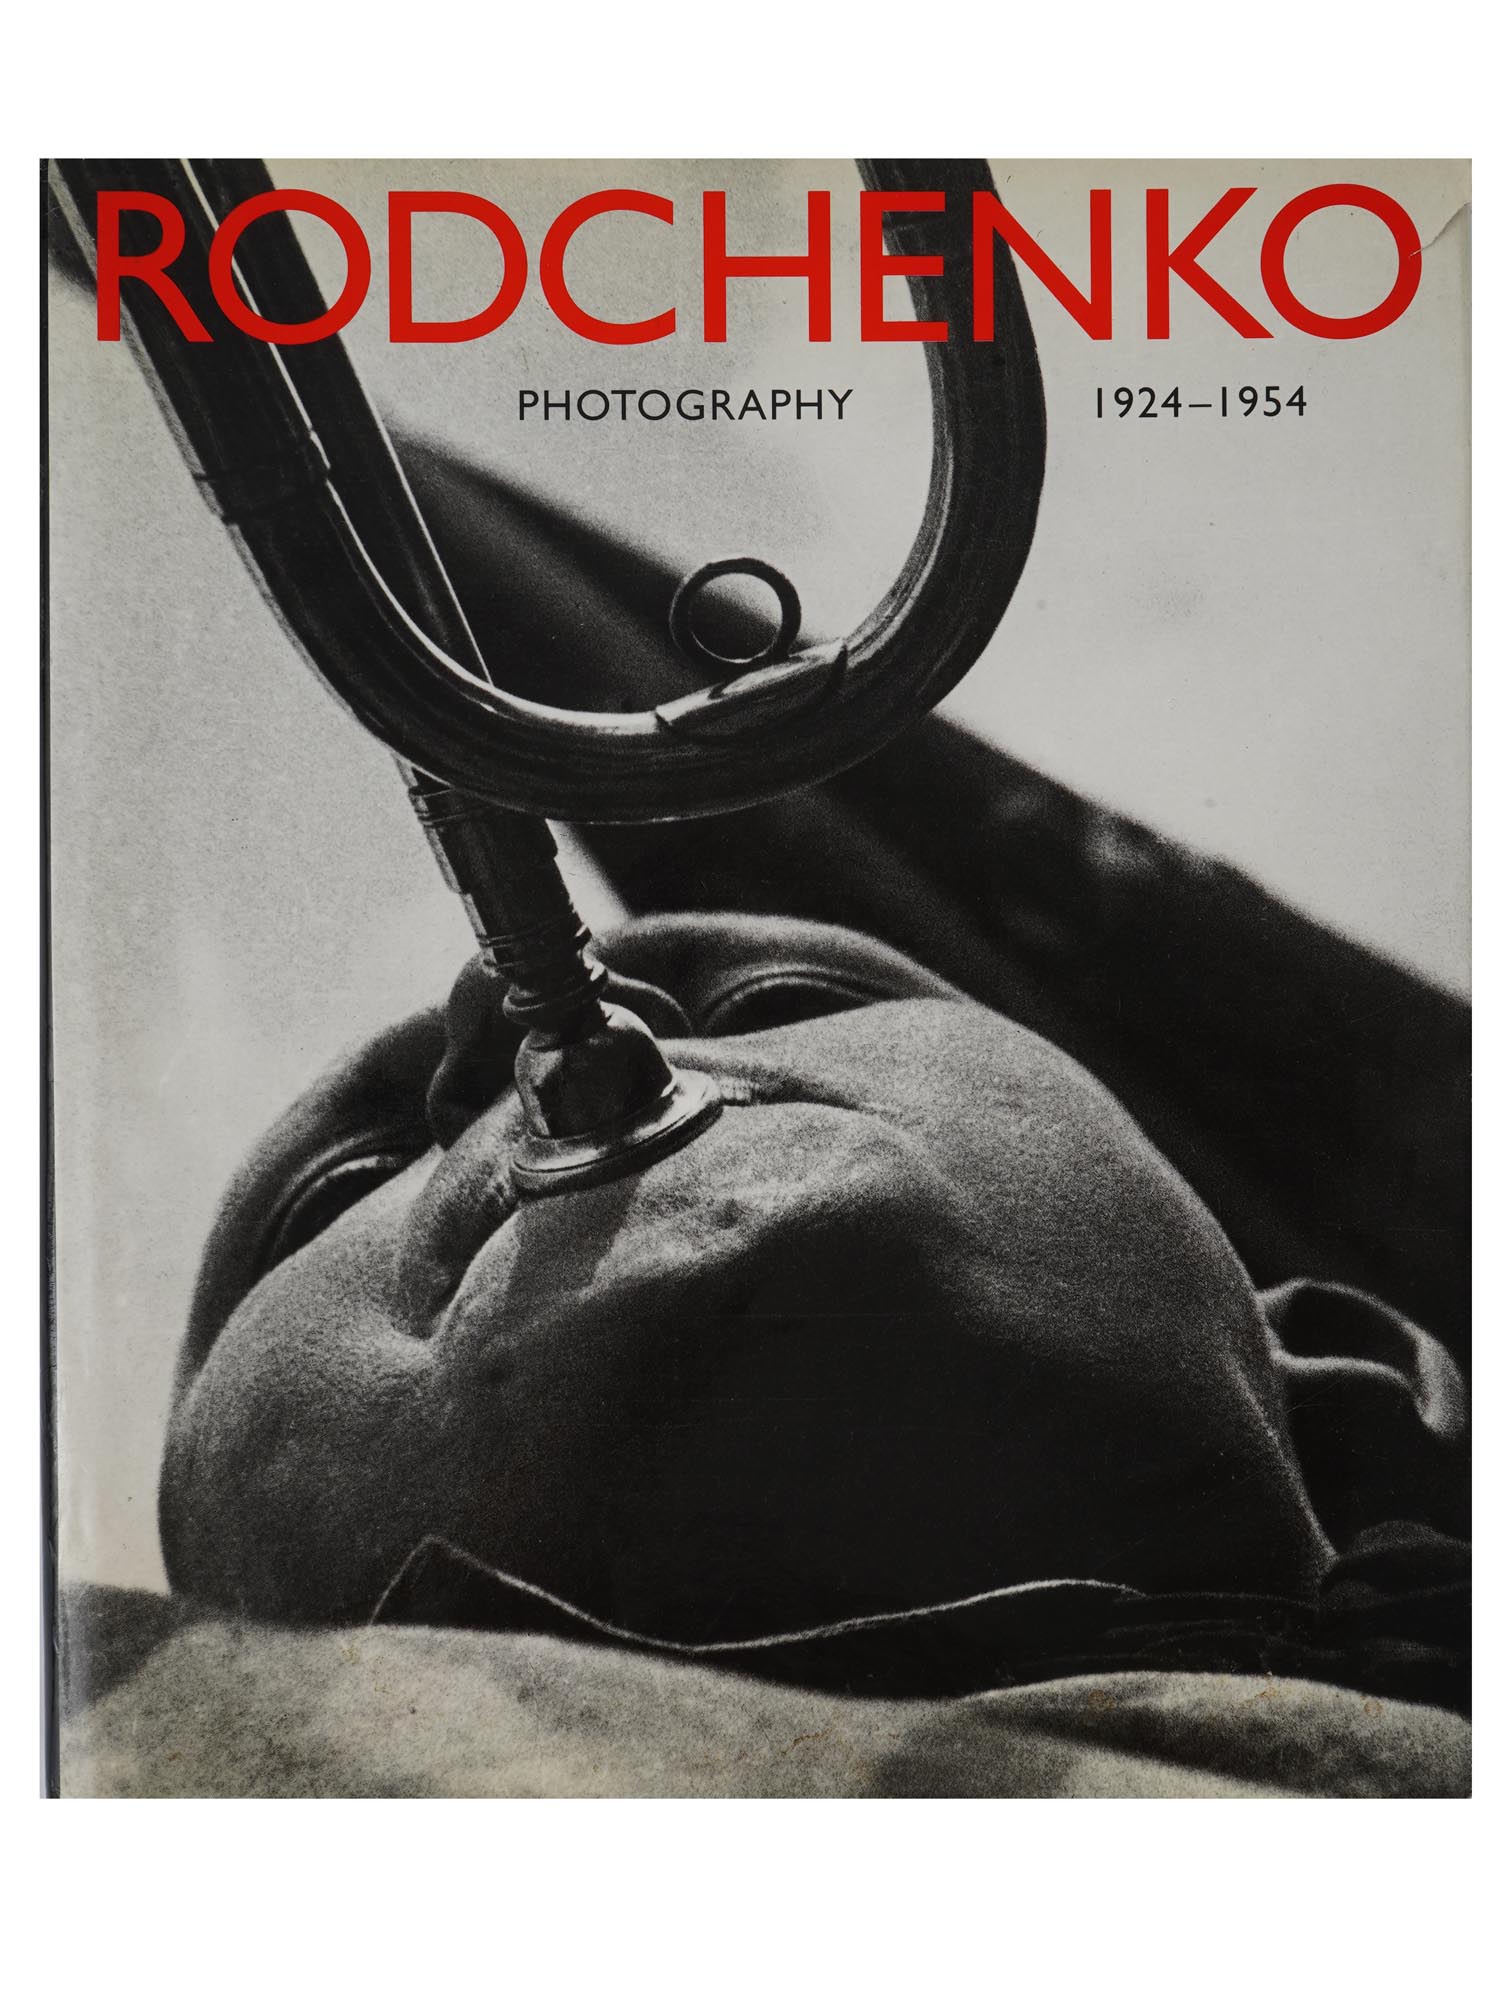 1996 ALEXANDER RODCHENKO PHOTOGRAPHY BOOK PIC-1